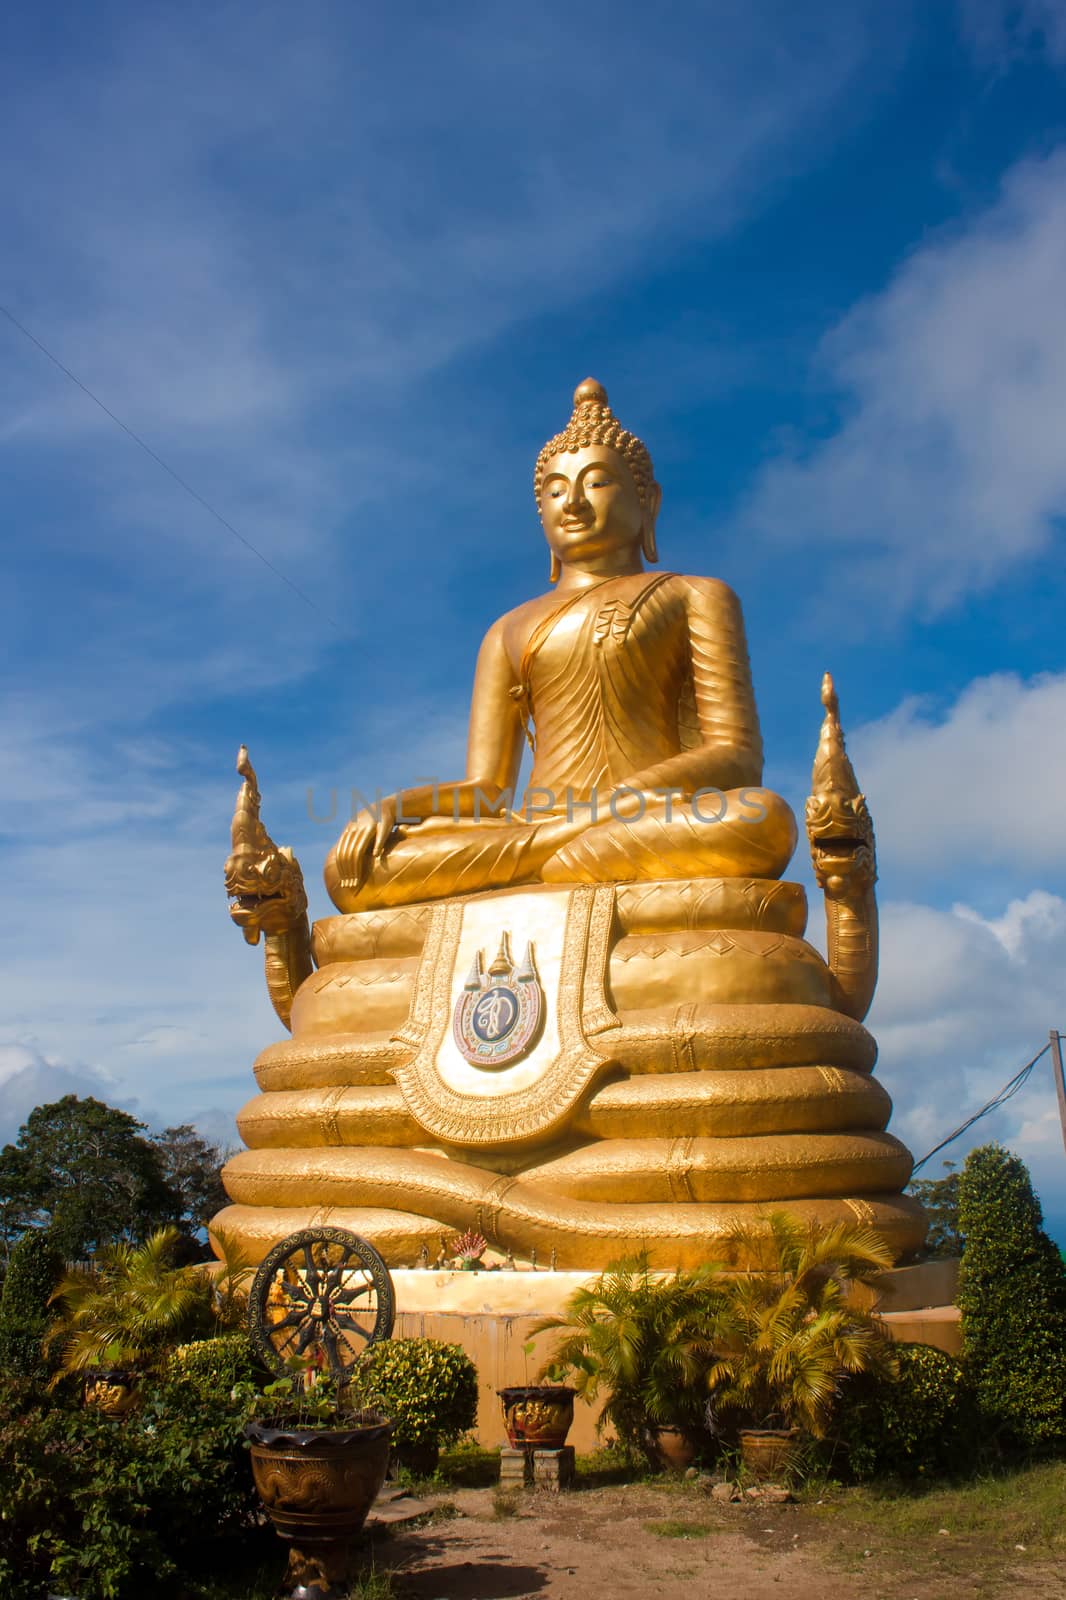 Buddha on the island Phuket, Thailand by sateda